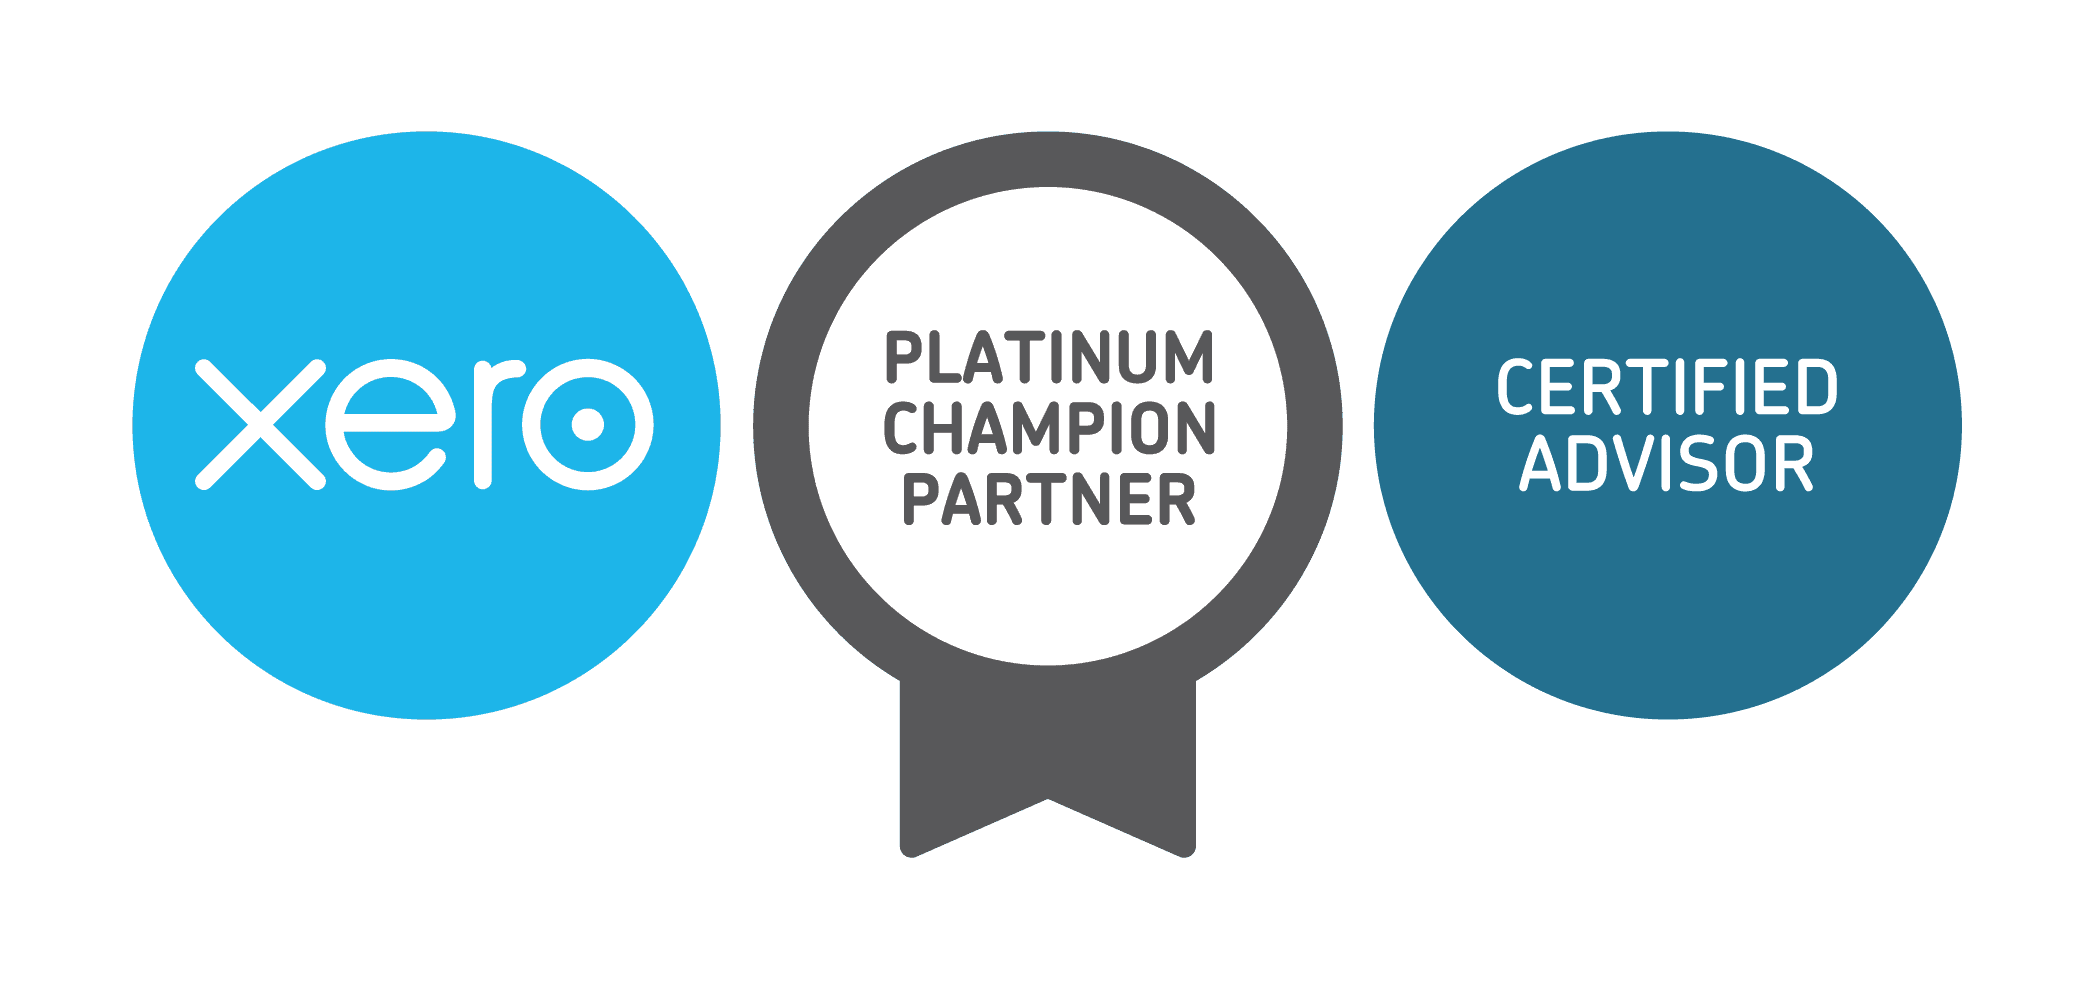 xero-platinum-champion-partner-dolman-bateman